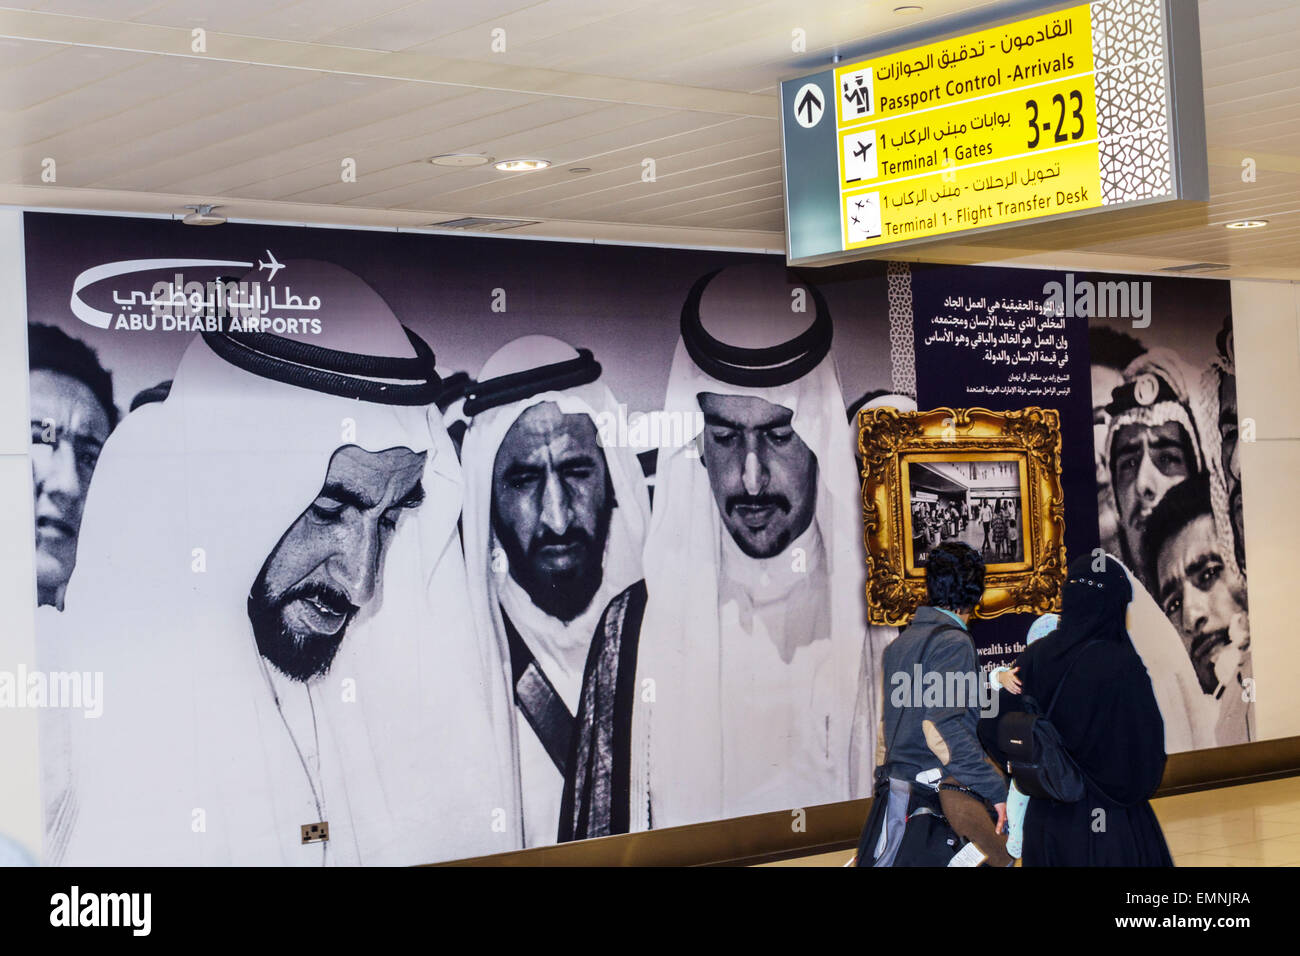 Abu Dhabi United Arab Emirates UAE,International Airport,AUH,terminal,gate,mural,billboard,sheik,Arab,keffiyeh,agal,adult adults man men male,visitors Stock Photo